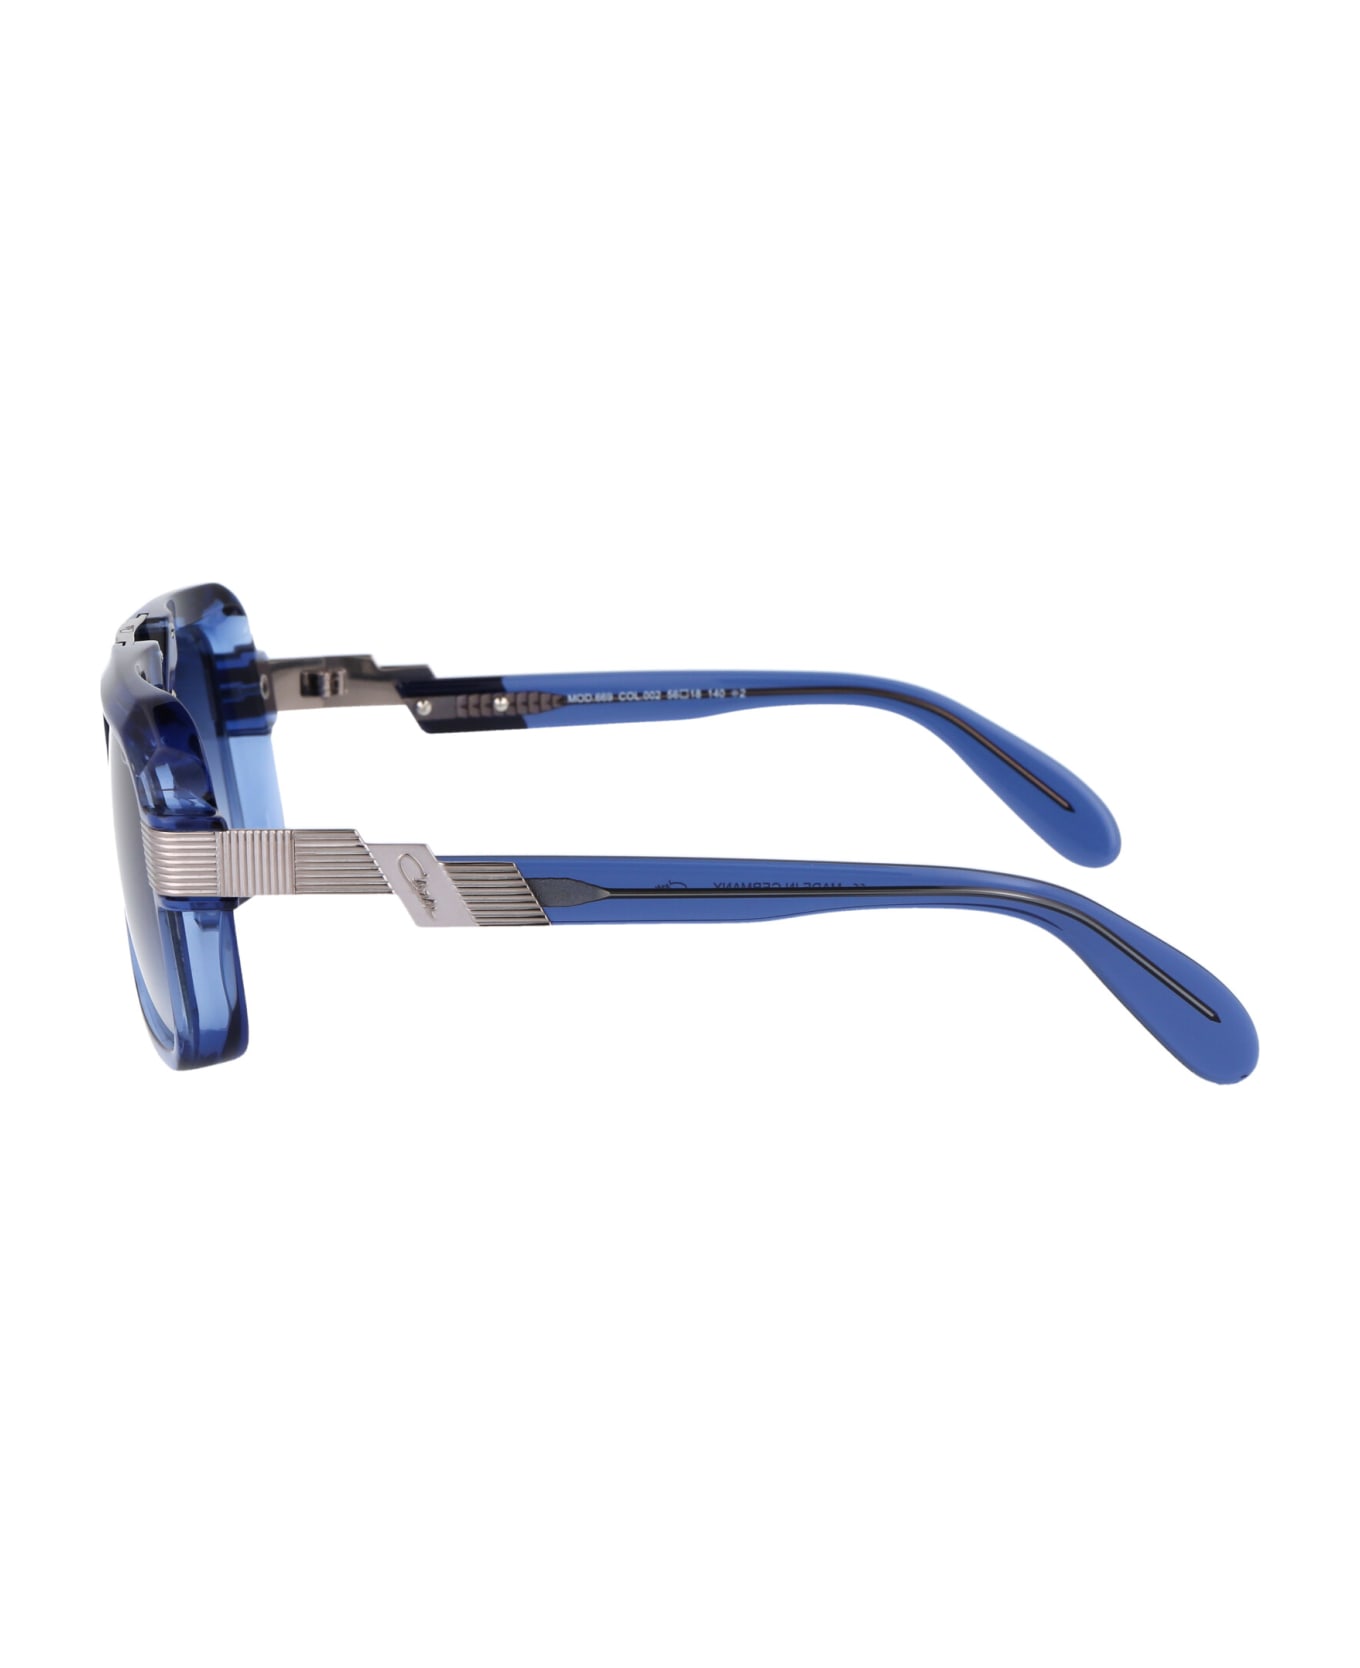 Cazal Mod. 669 Sunglasses - 002 BLUE